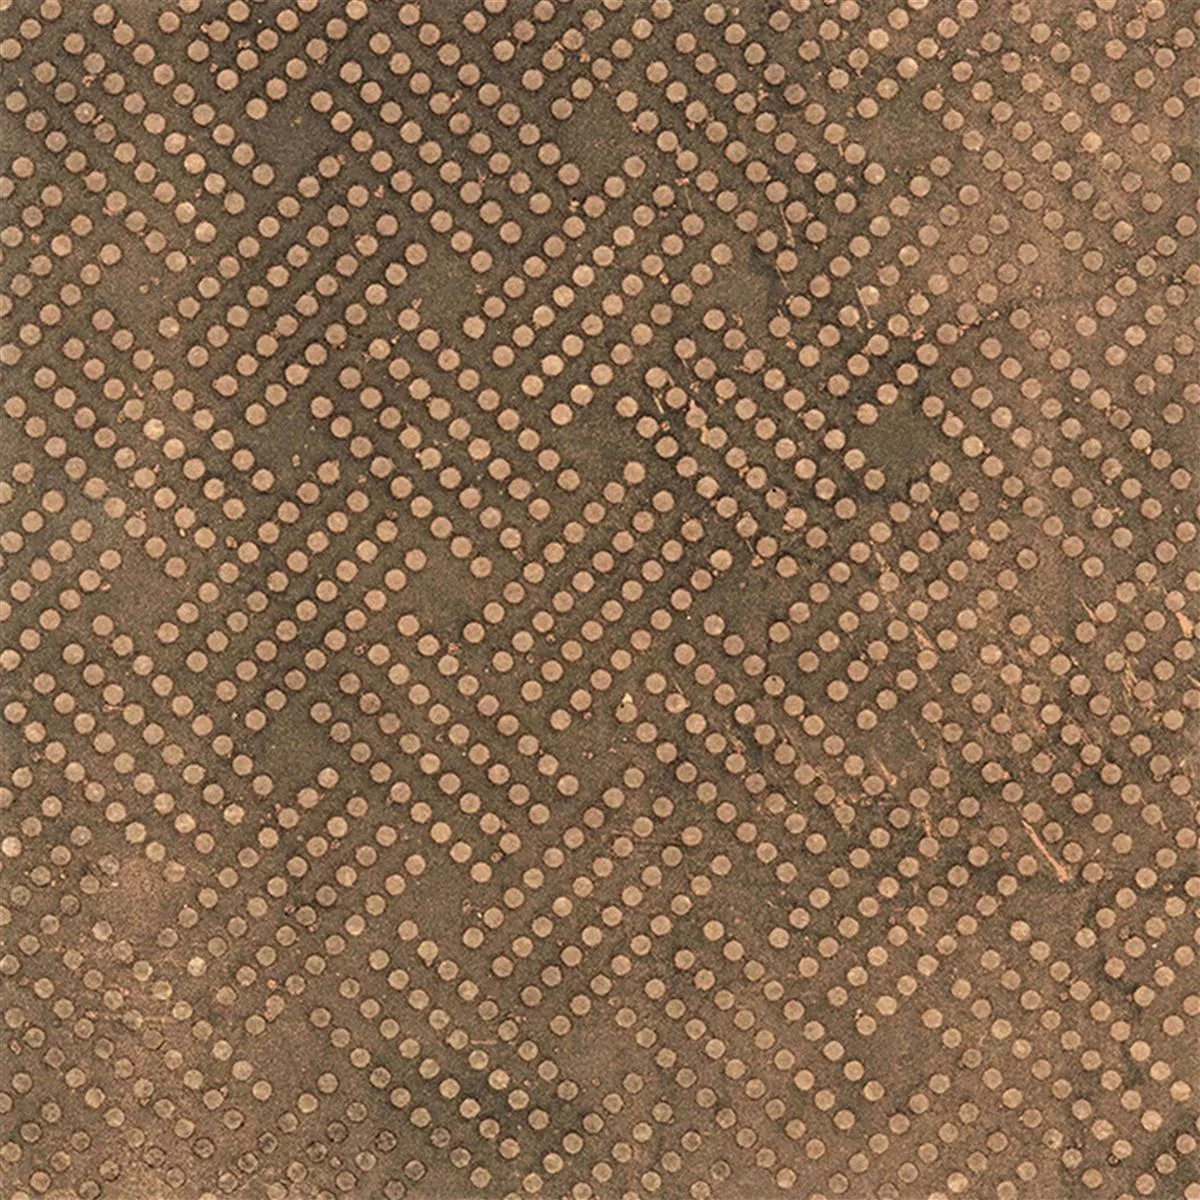 Podlahové Dlaždice Chicago Kovový Vzhled Bronzová R9 - 18,5x18,5cm - 1